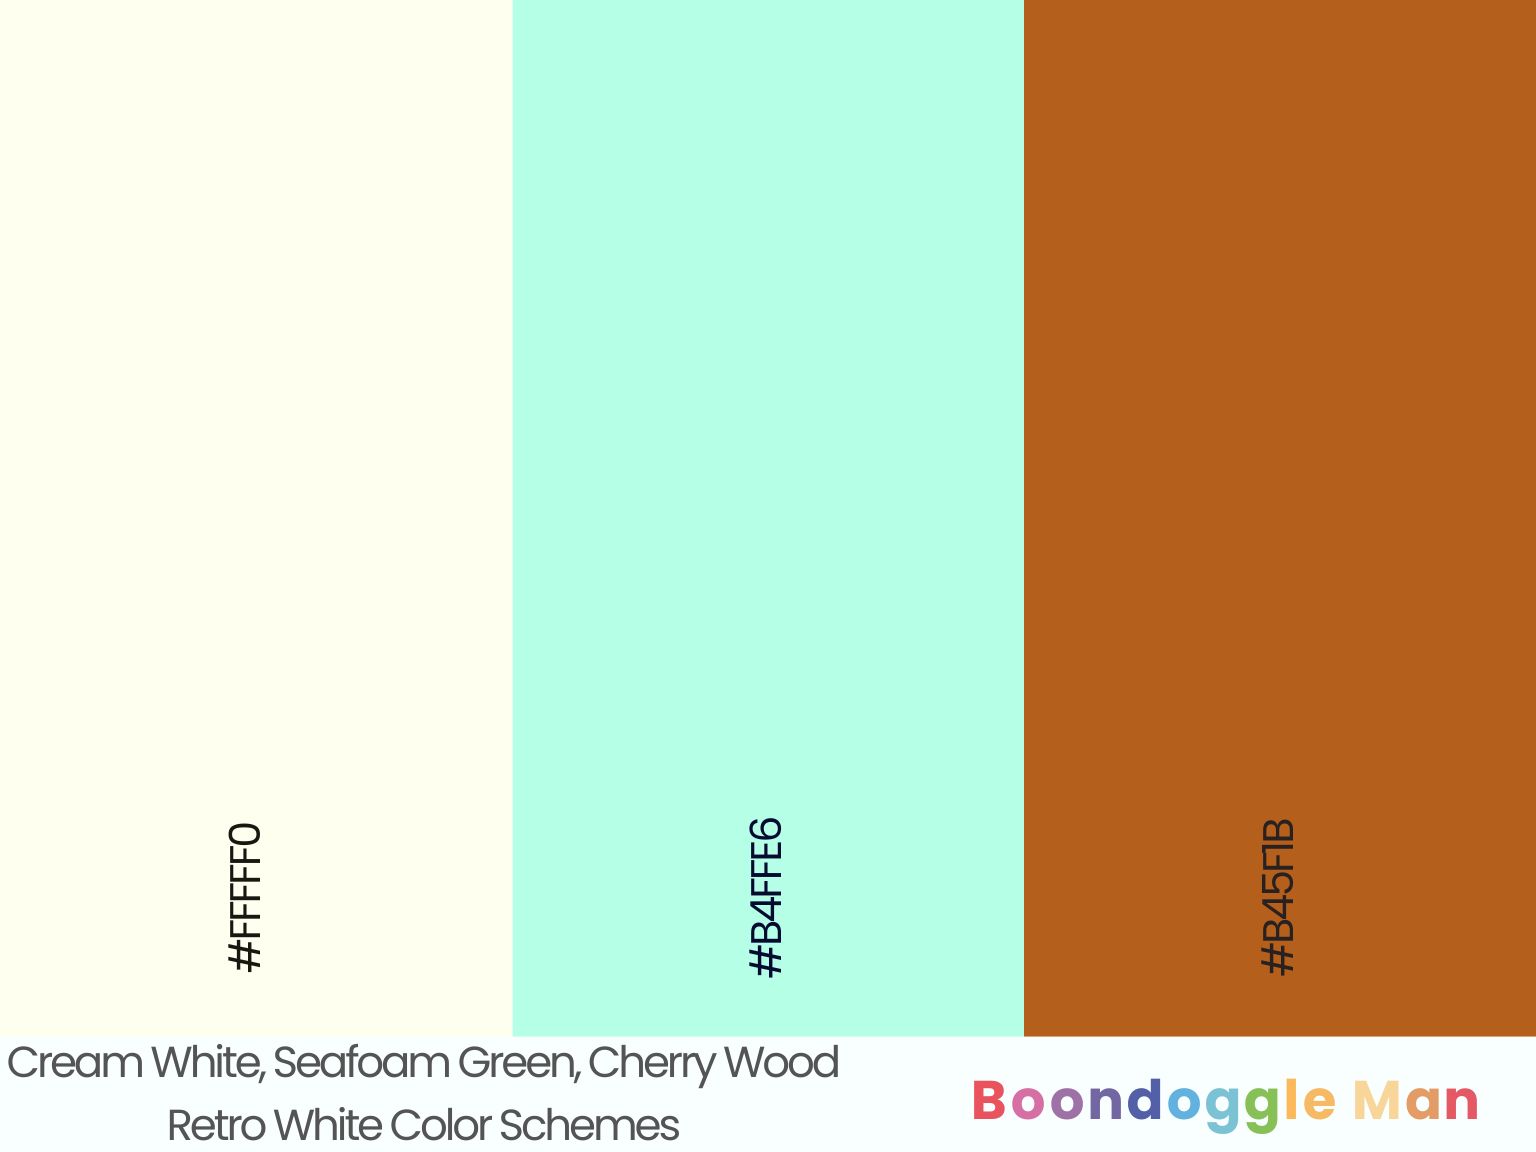 Cream White, Seafoam Green, Cherry Wood